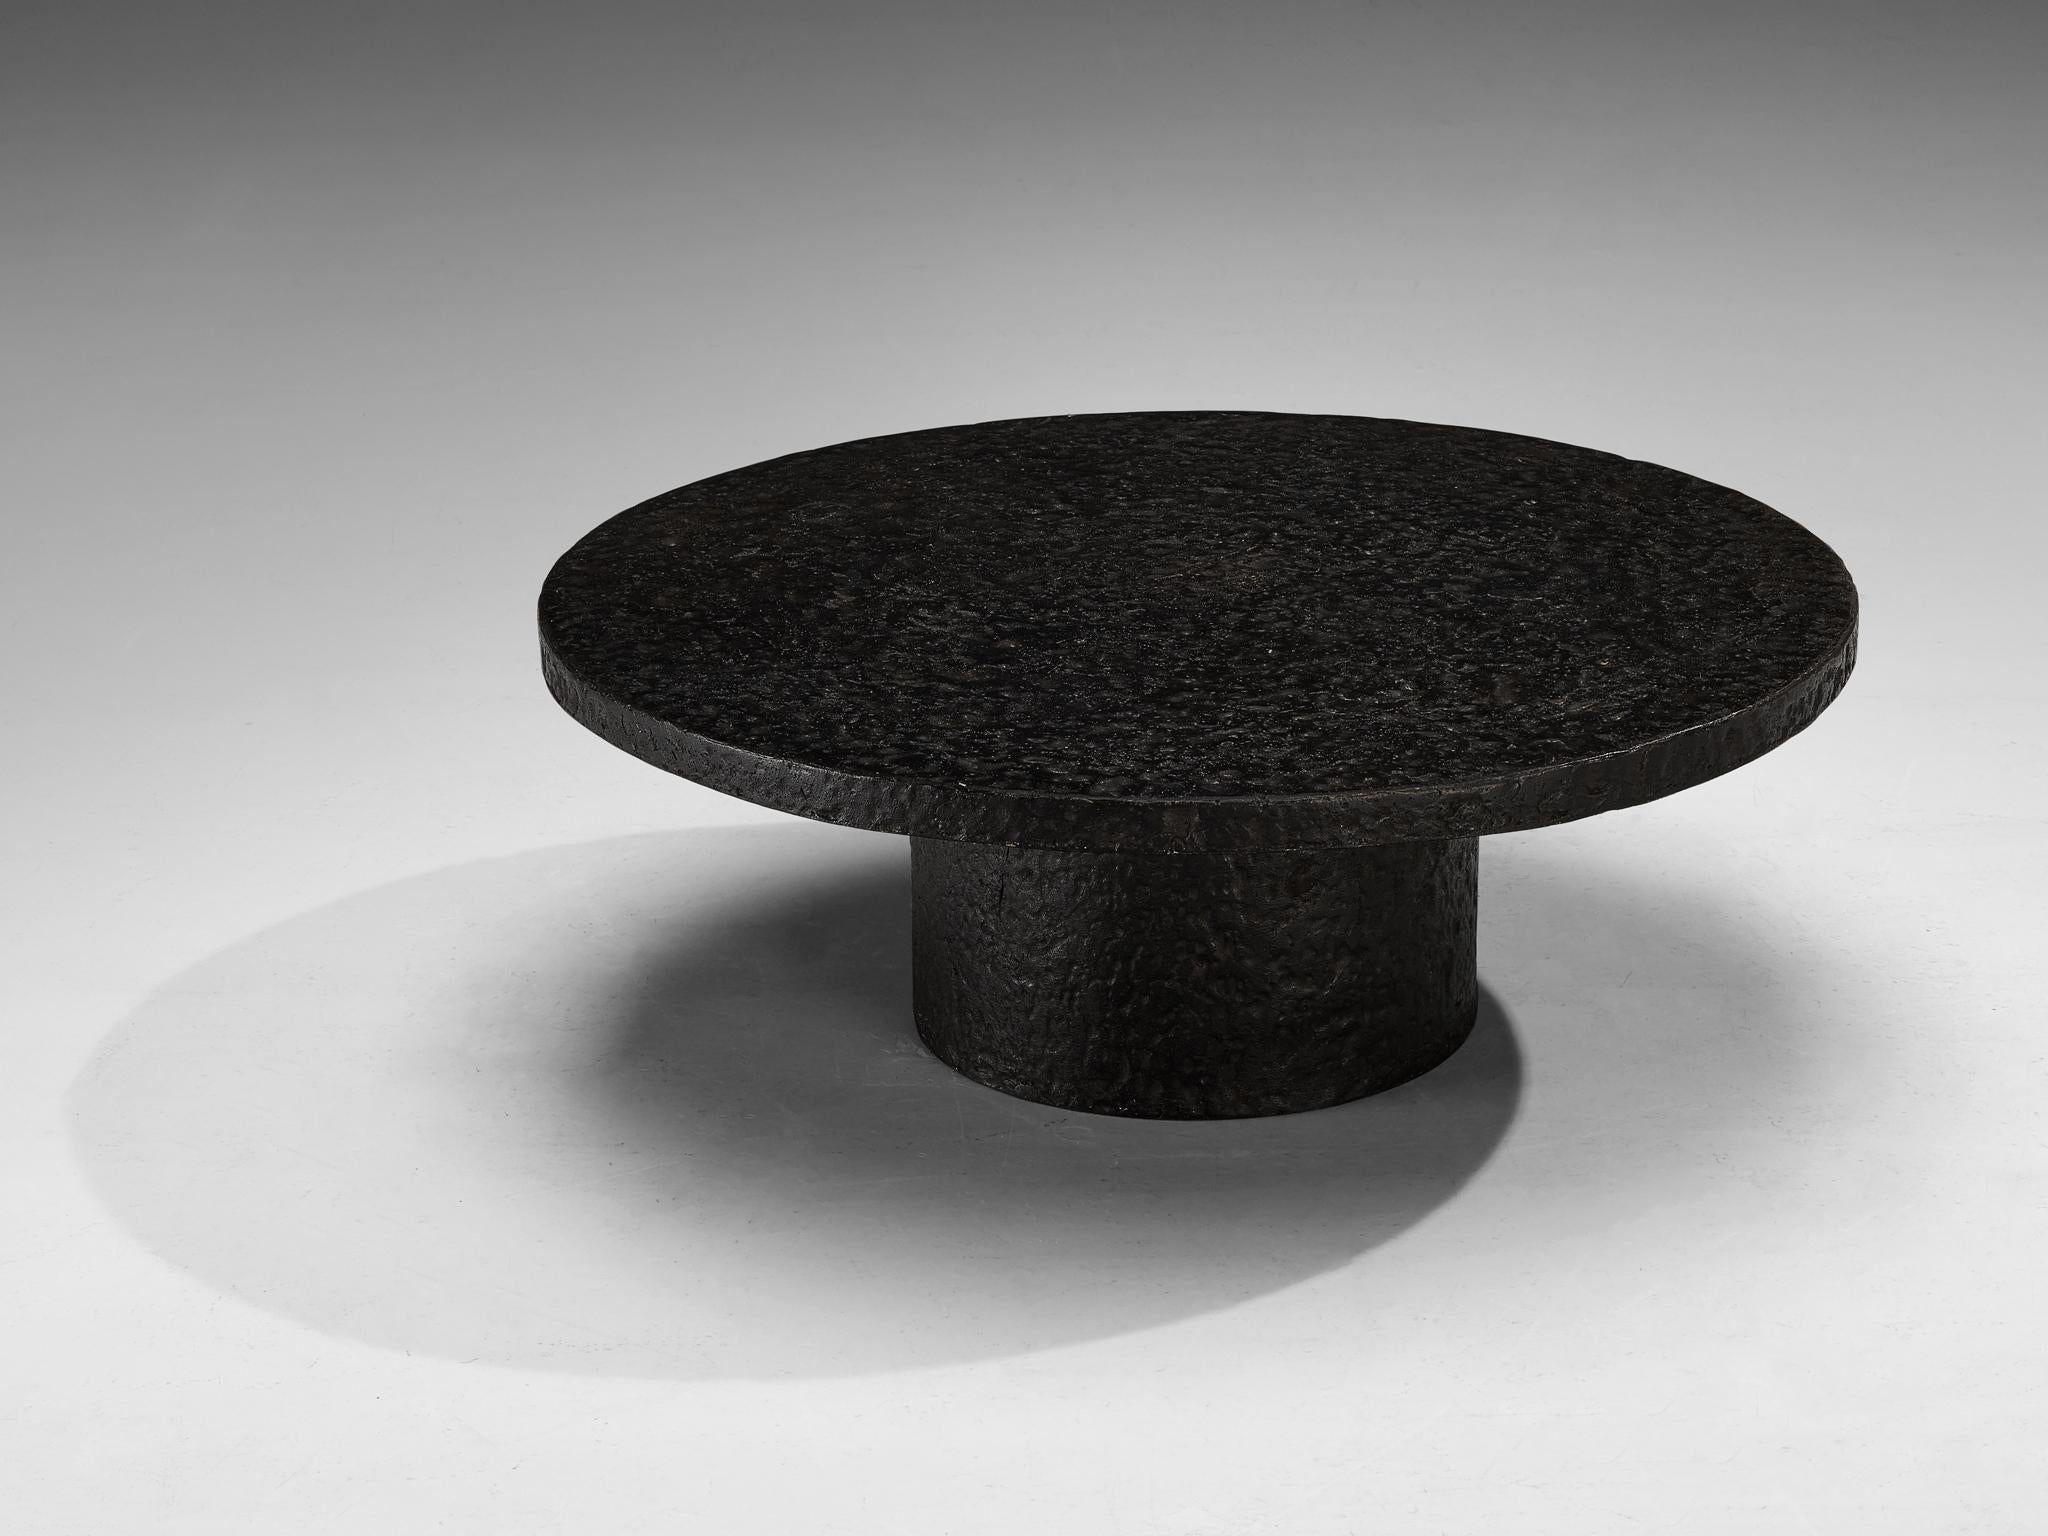 Brutalist Round Coffee Table in Black Stone Look Resin